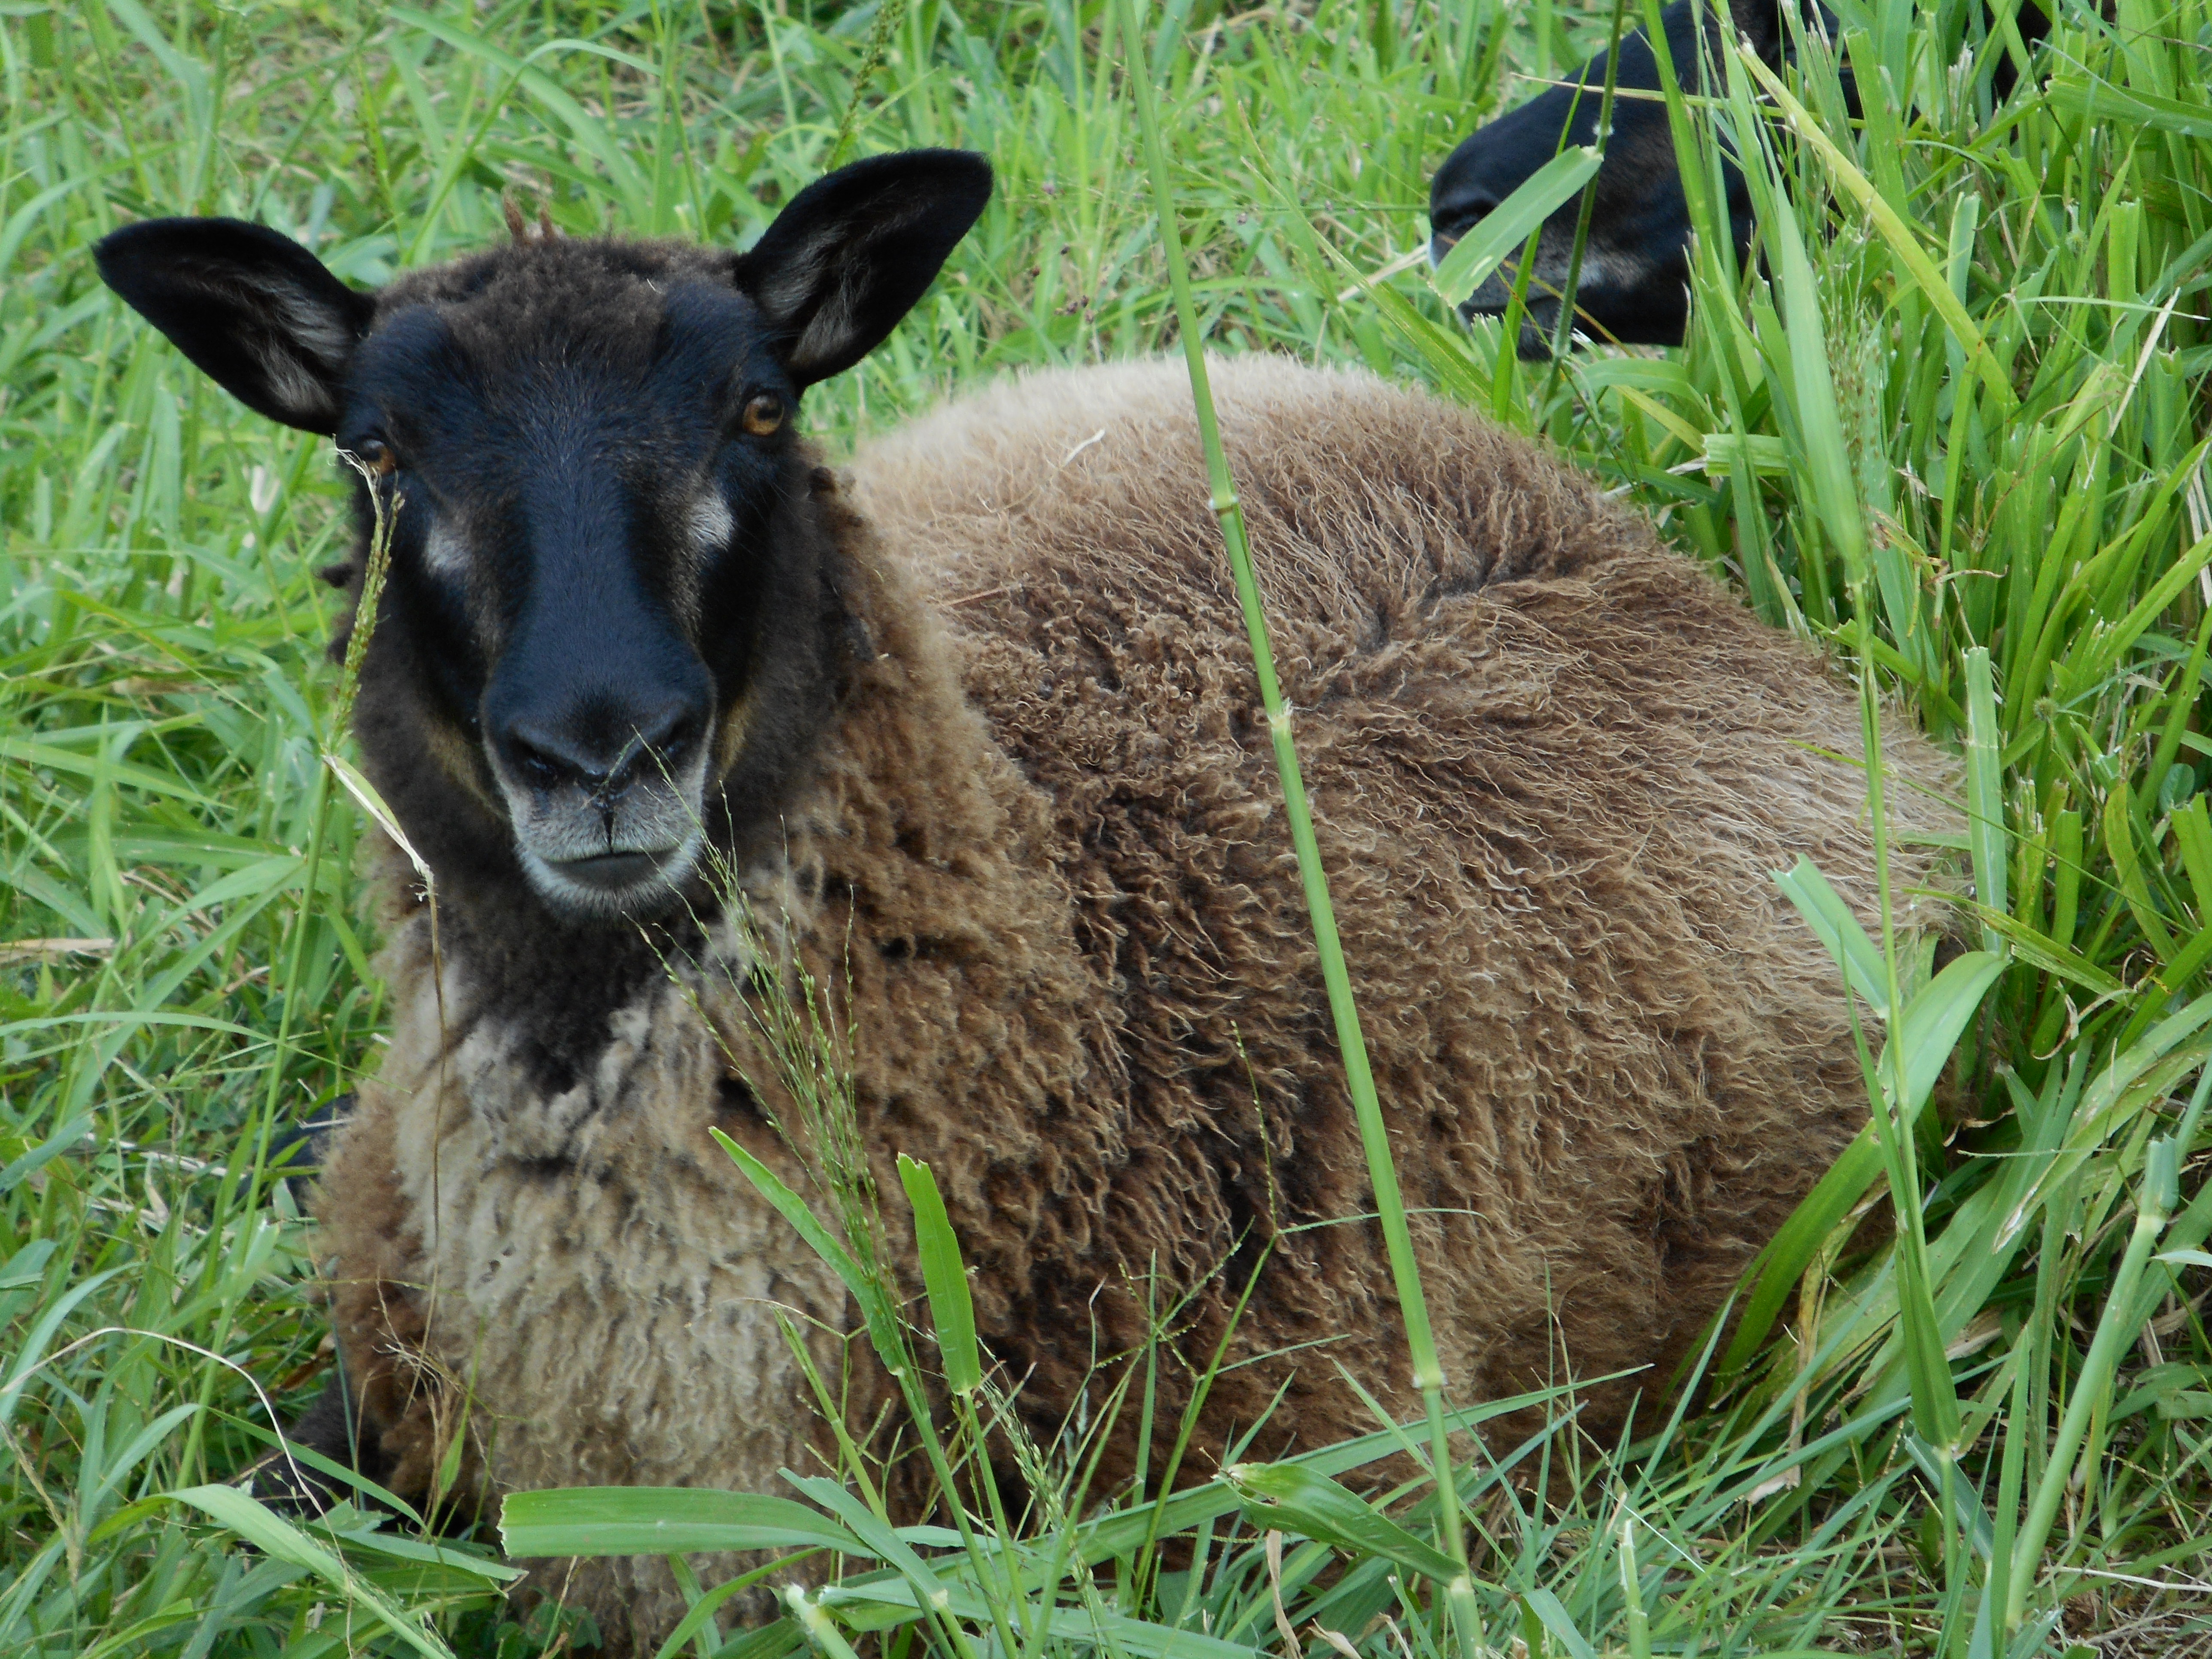 Treat's 2nd born lamb